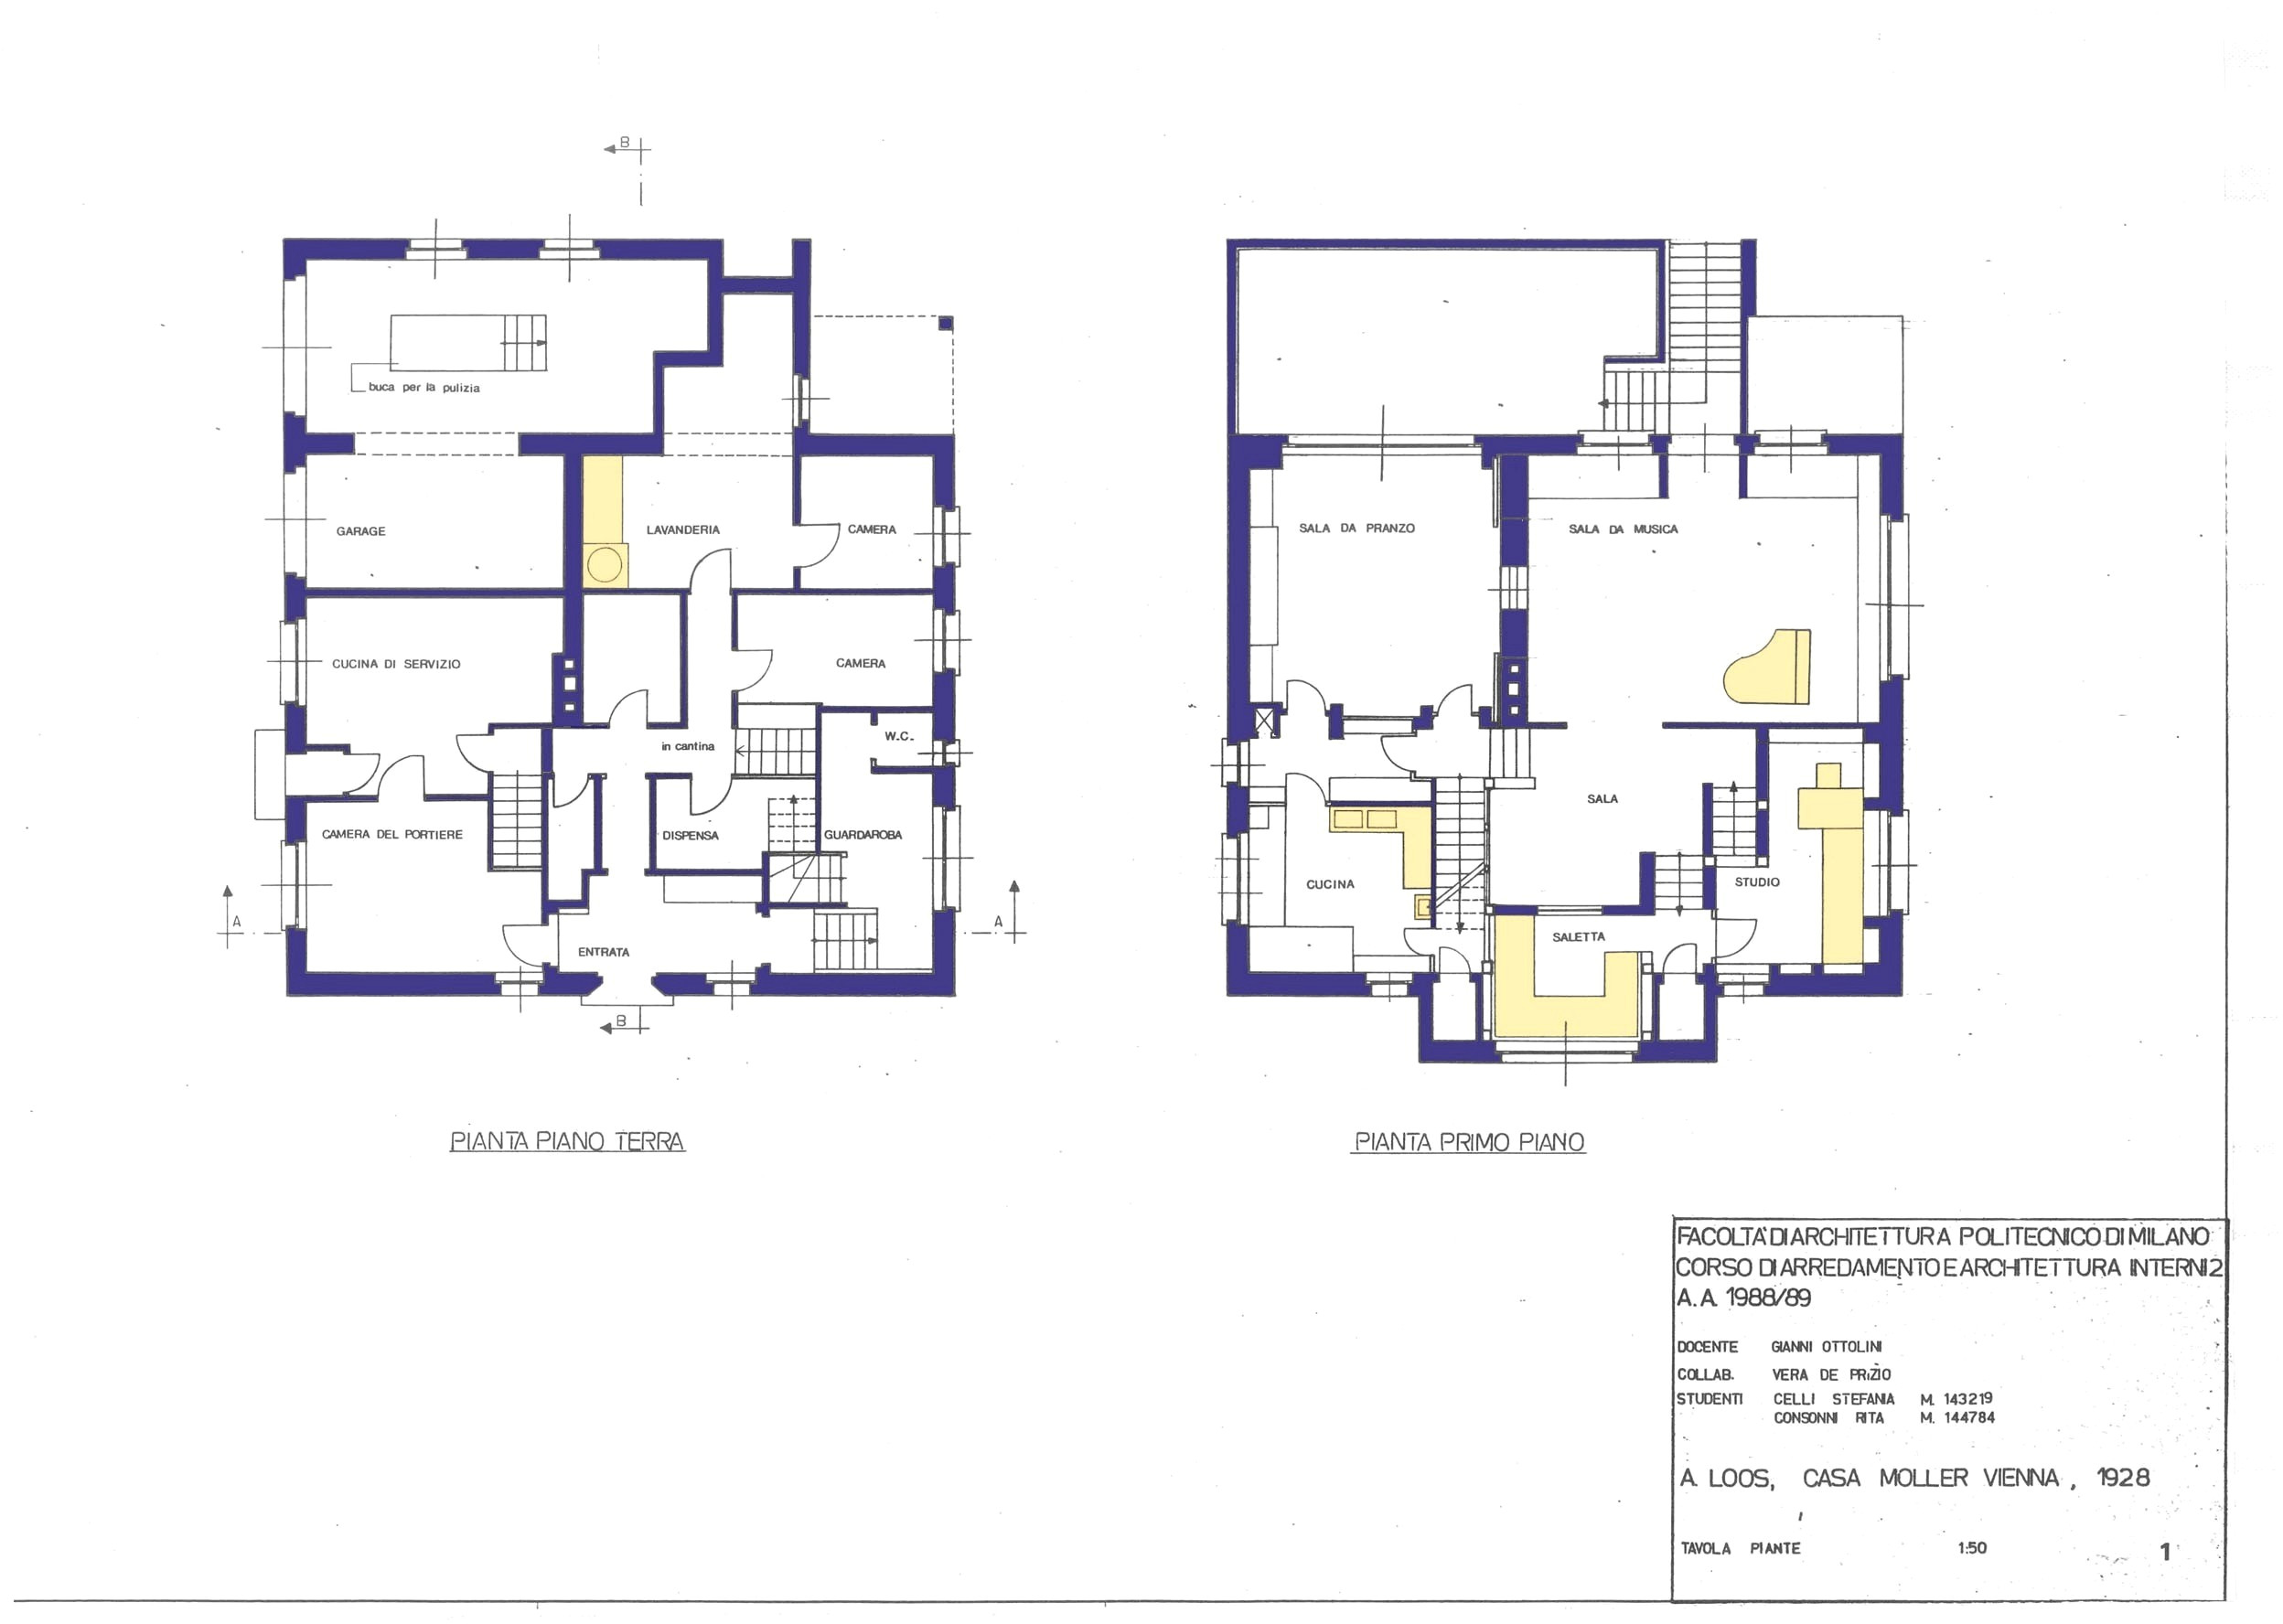 F Drawings Blueprints 39 Stylish Free Floor Plan Draw Image Floor Plan Design